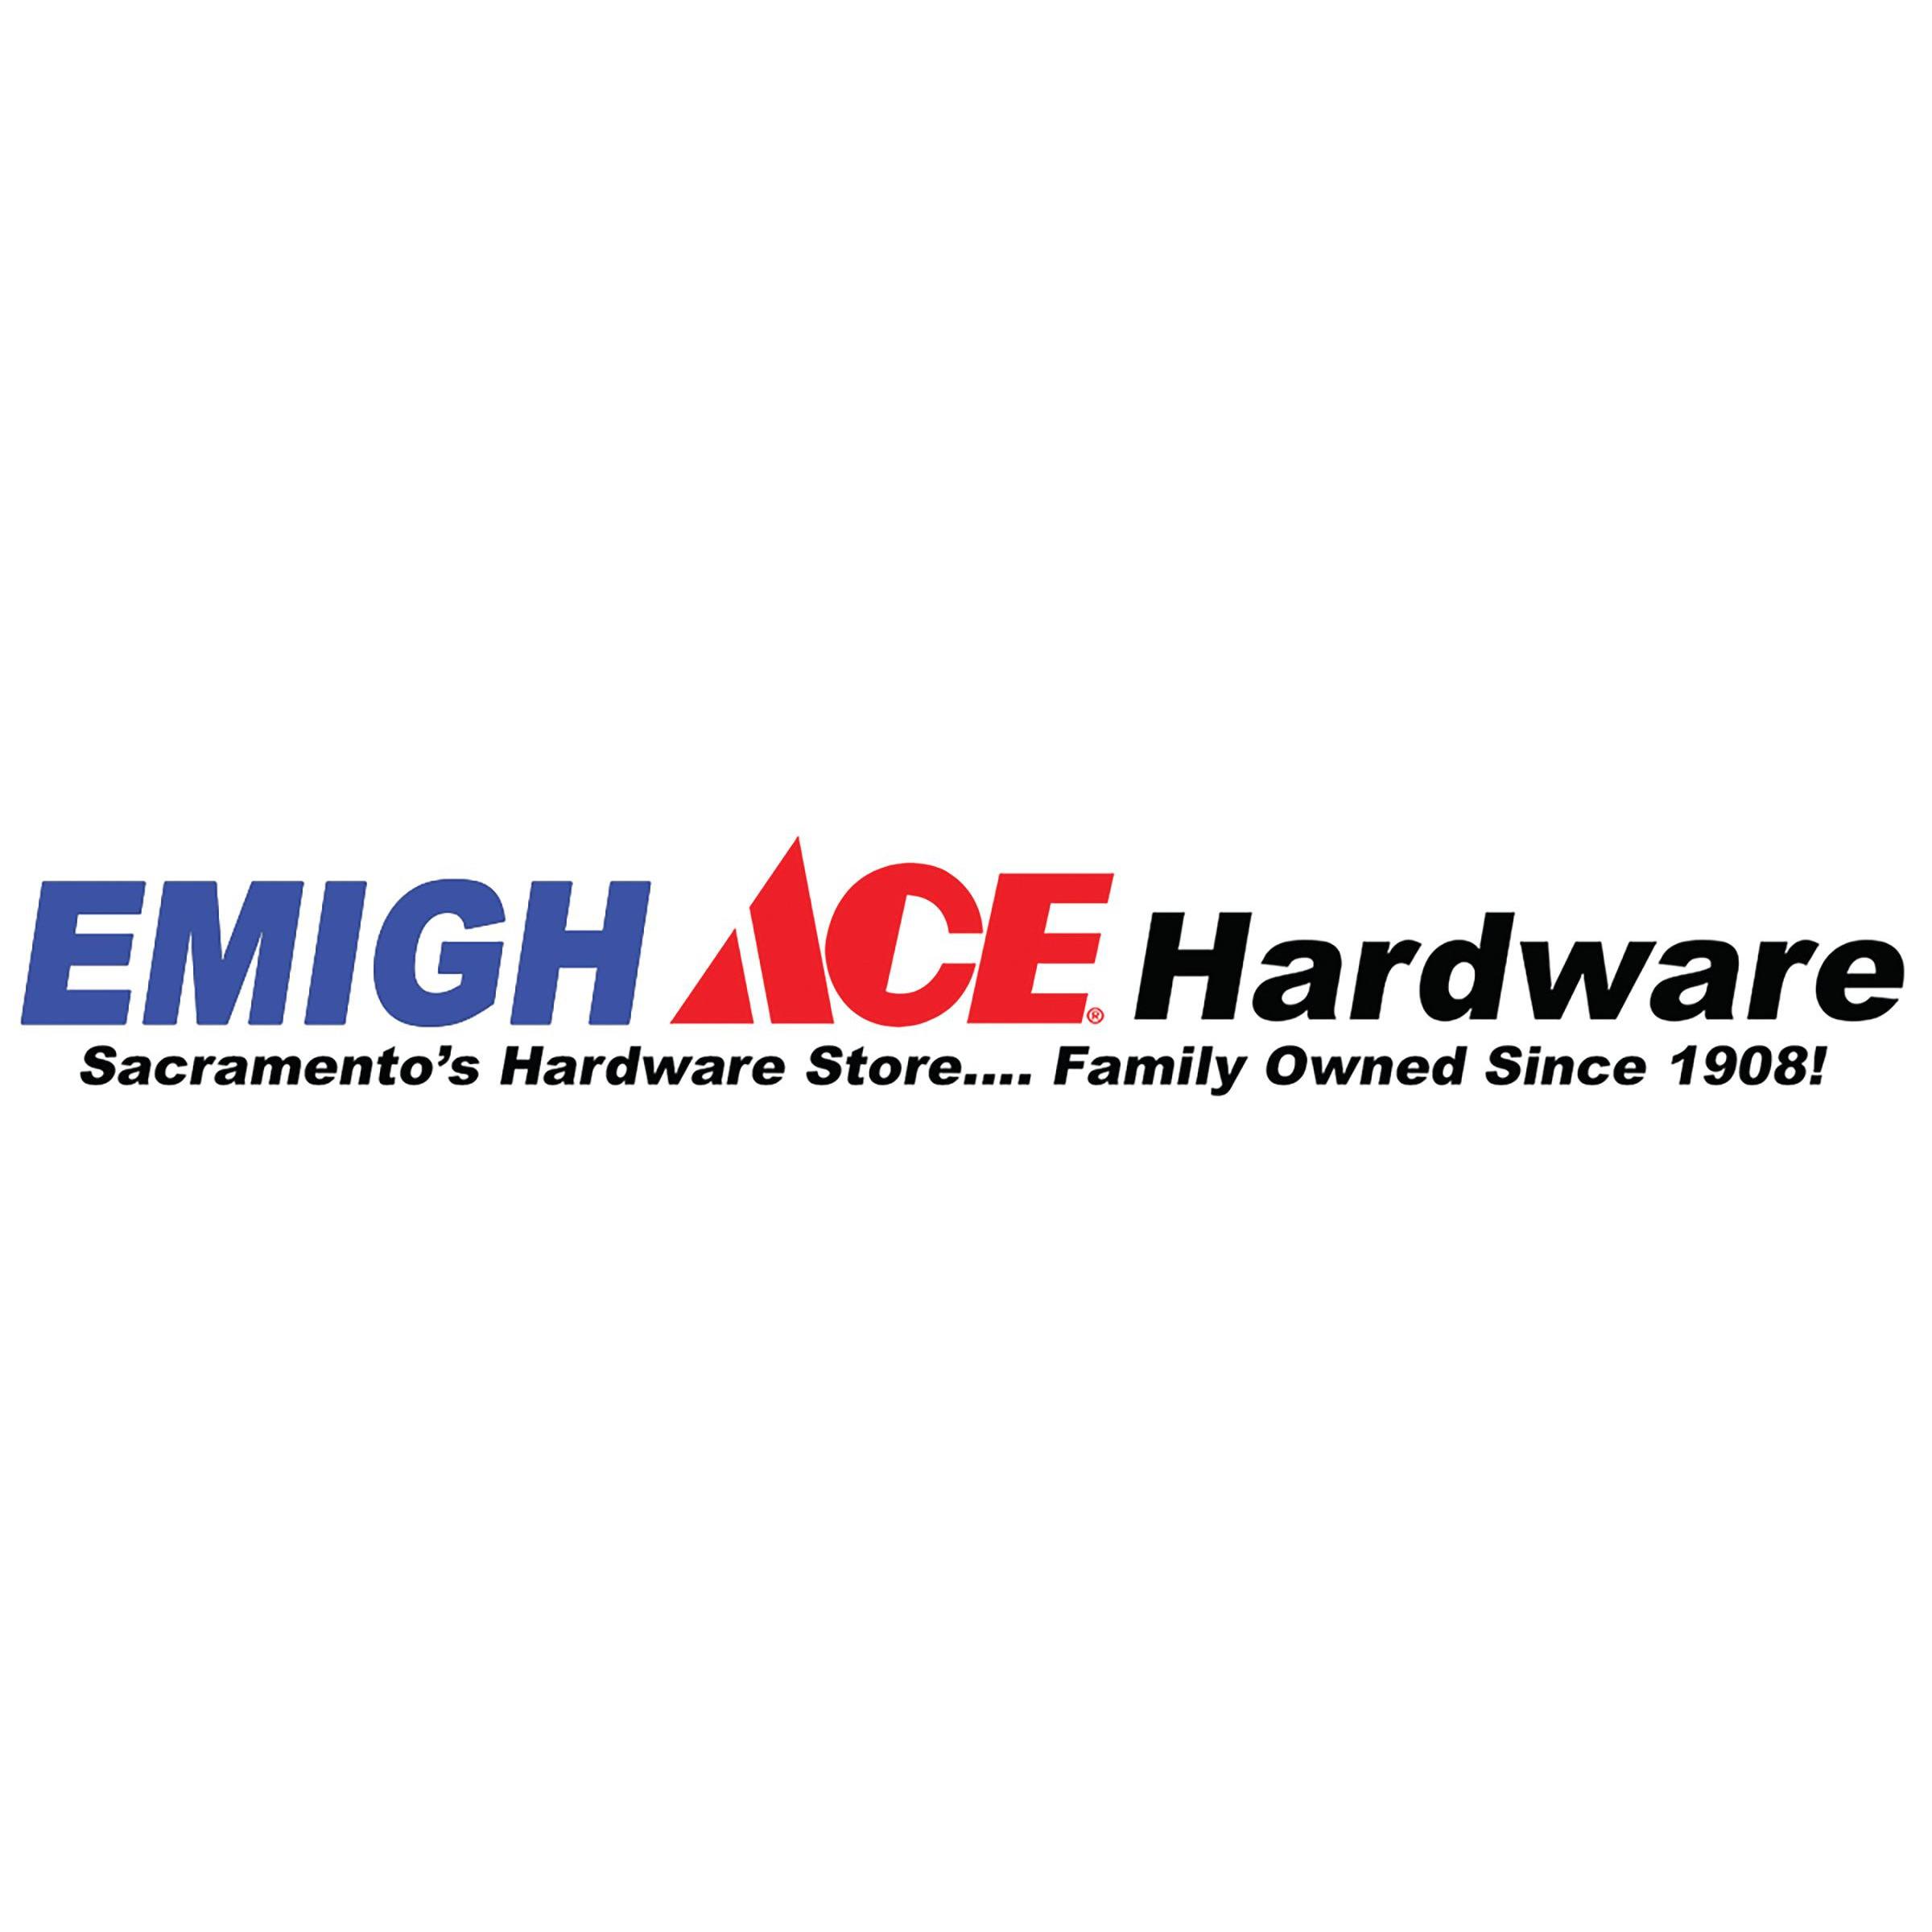 Black & Decker Tools, Emigh Ace Hardware